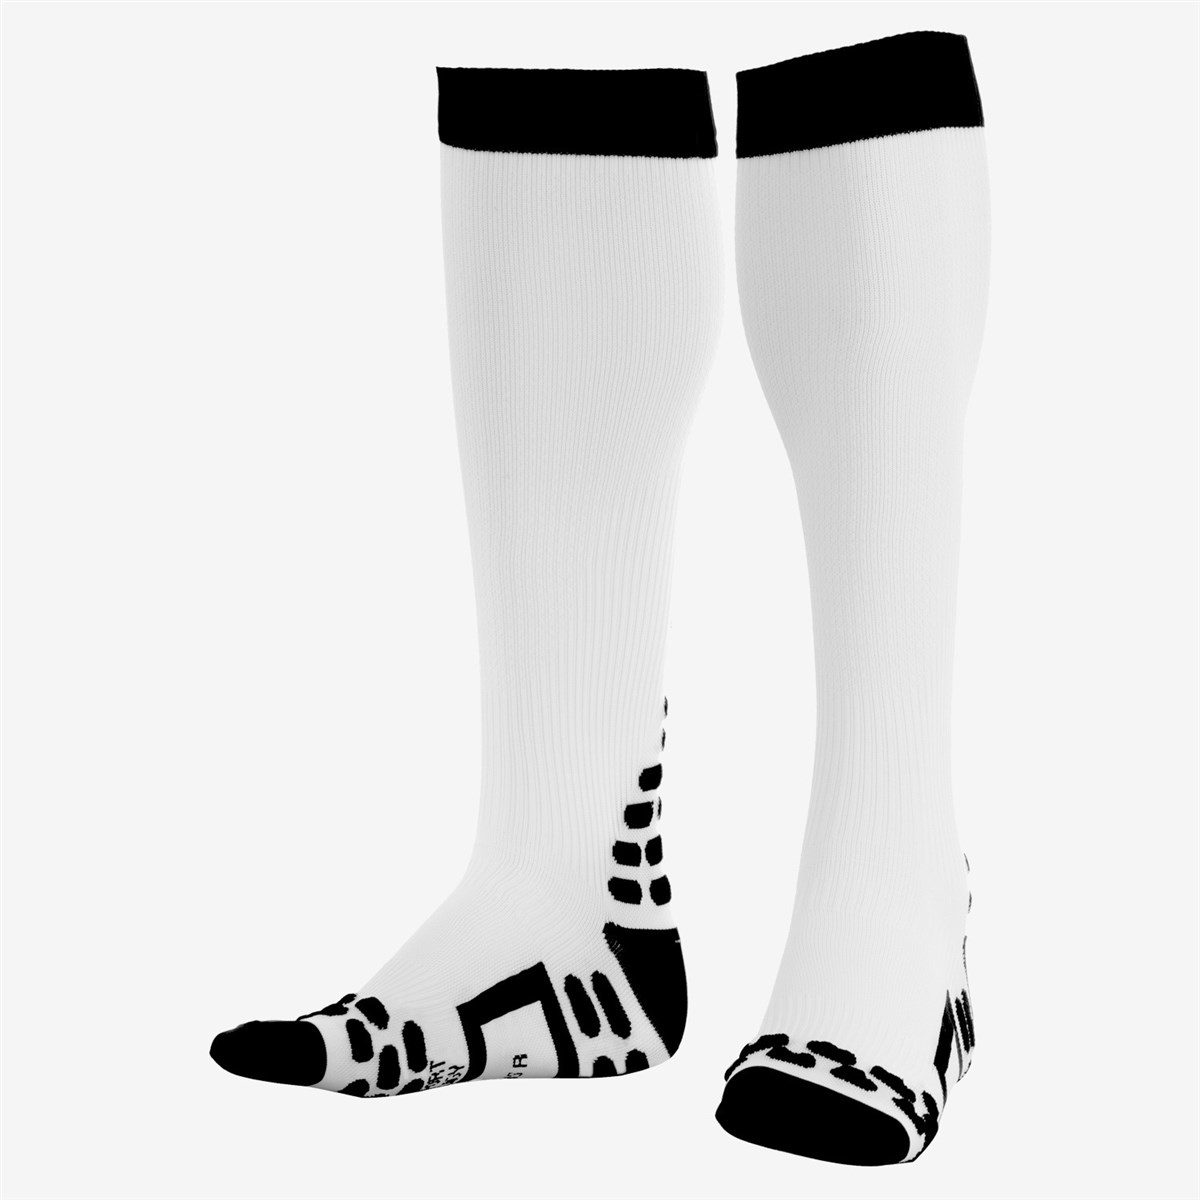 Orca Compression Full Socks product image